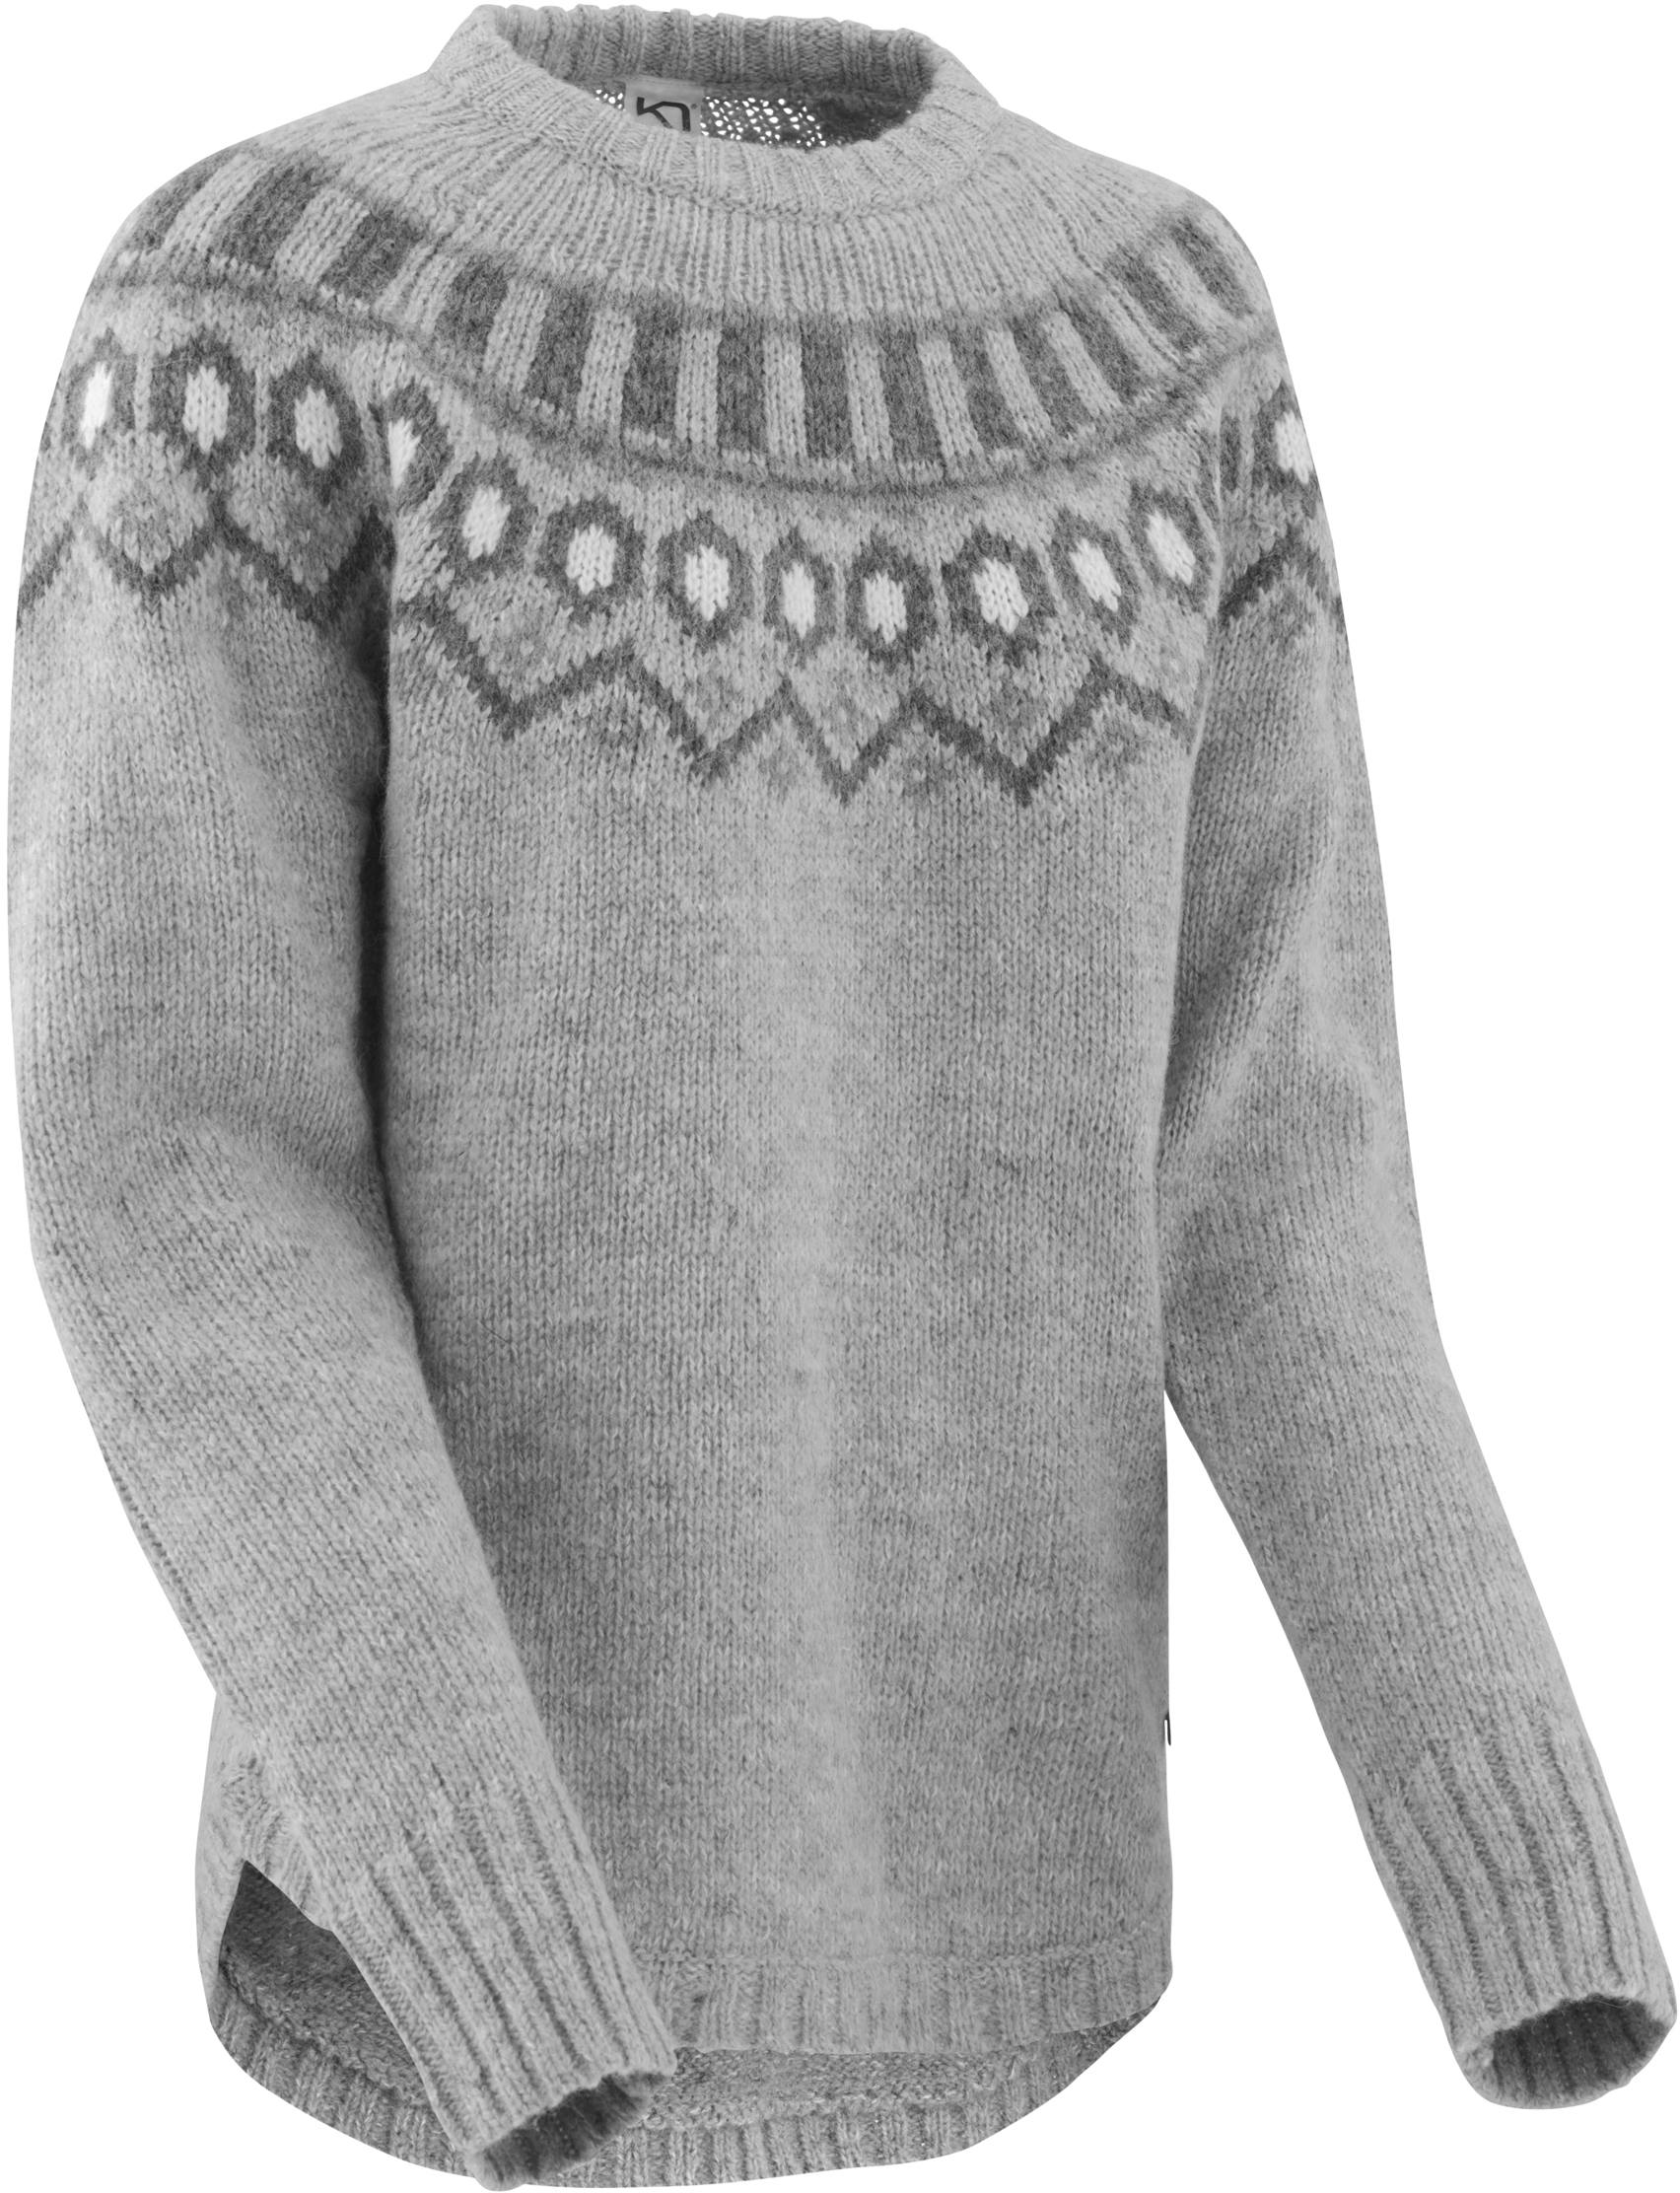 Дамски пуловер